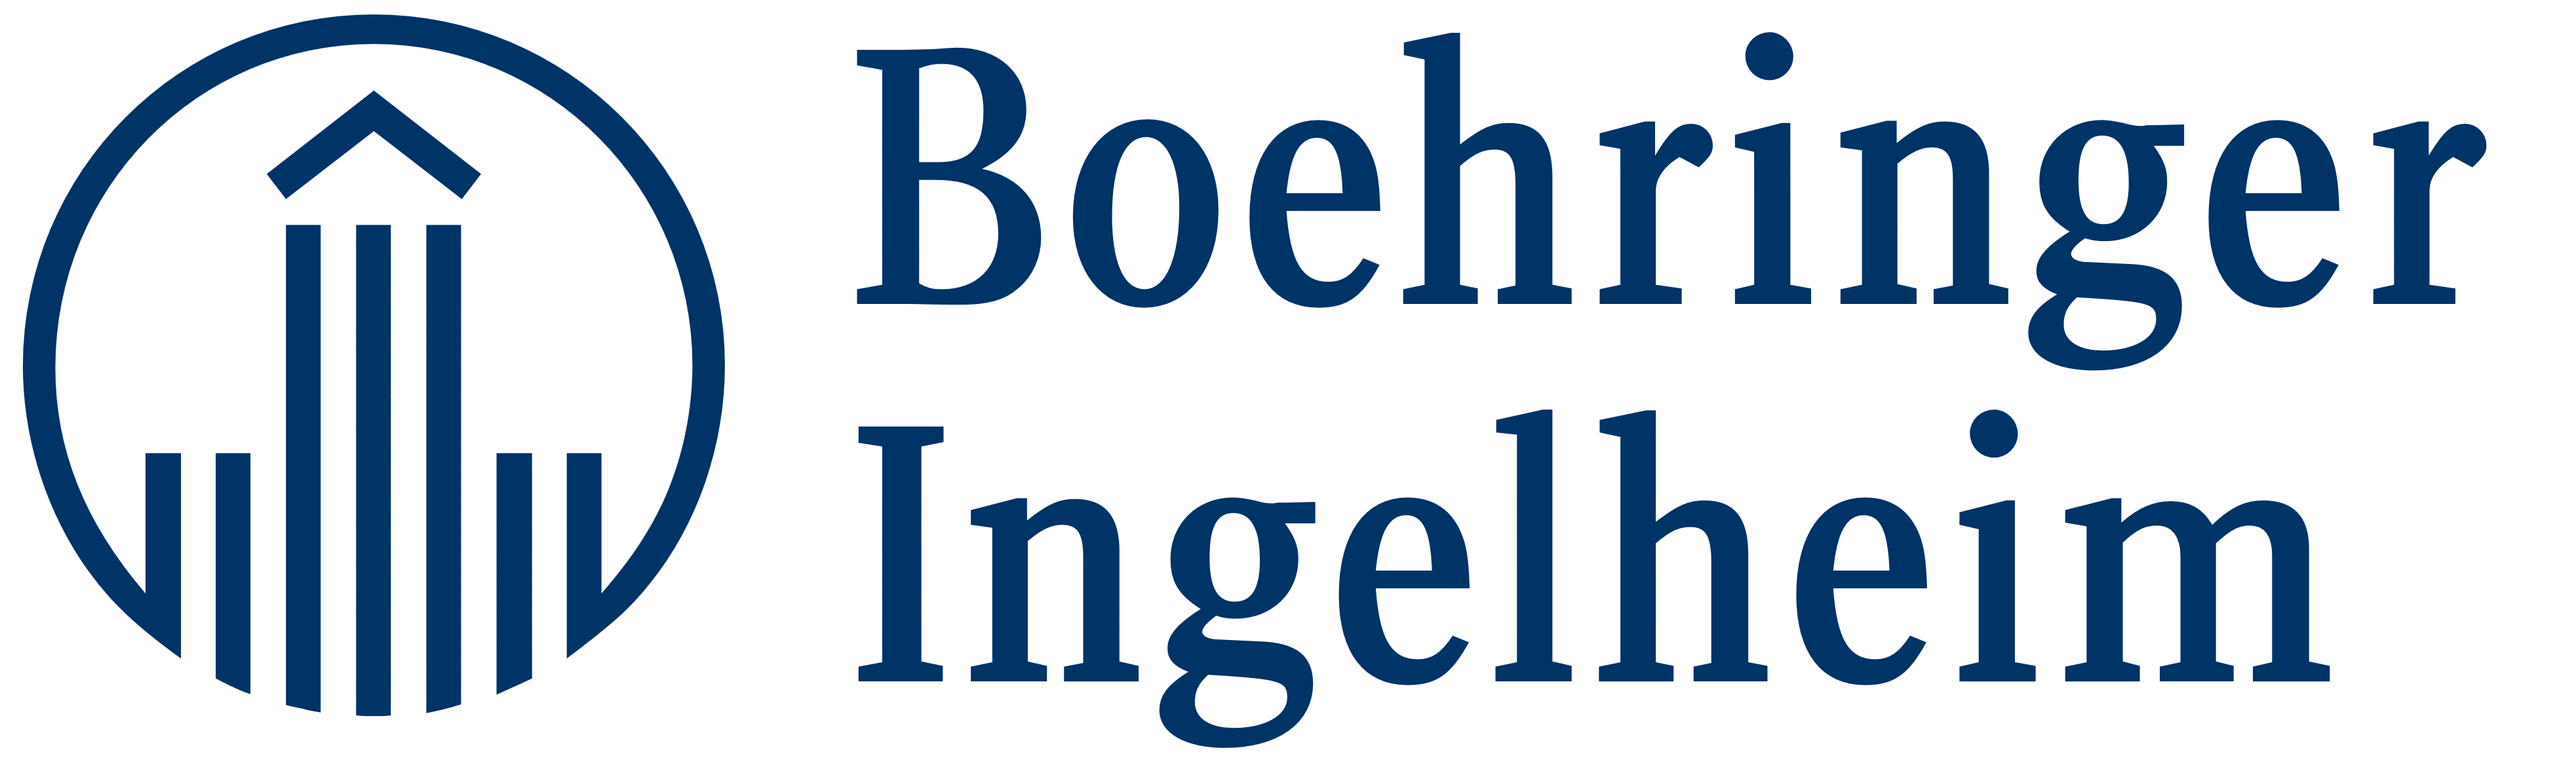 Boehringer Ingelheim hannover